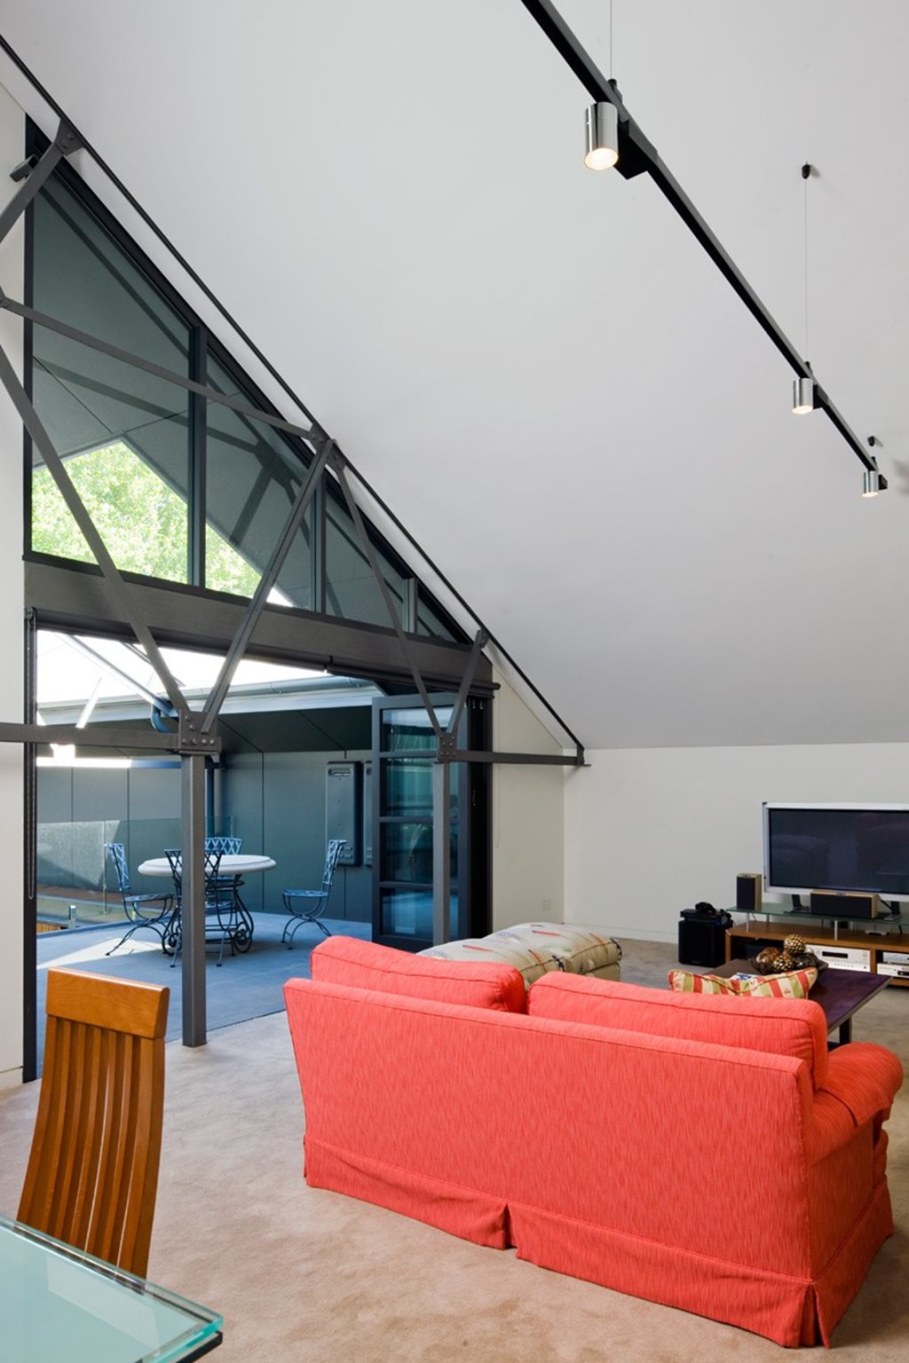 Grand loft house in Australia by Corben Architects studio - Living room 6